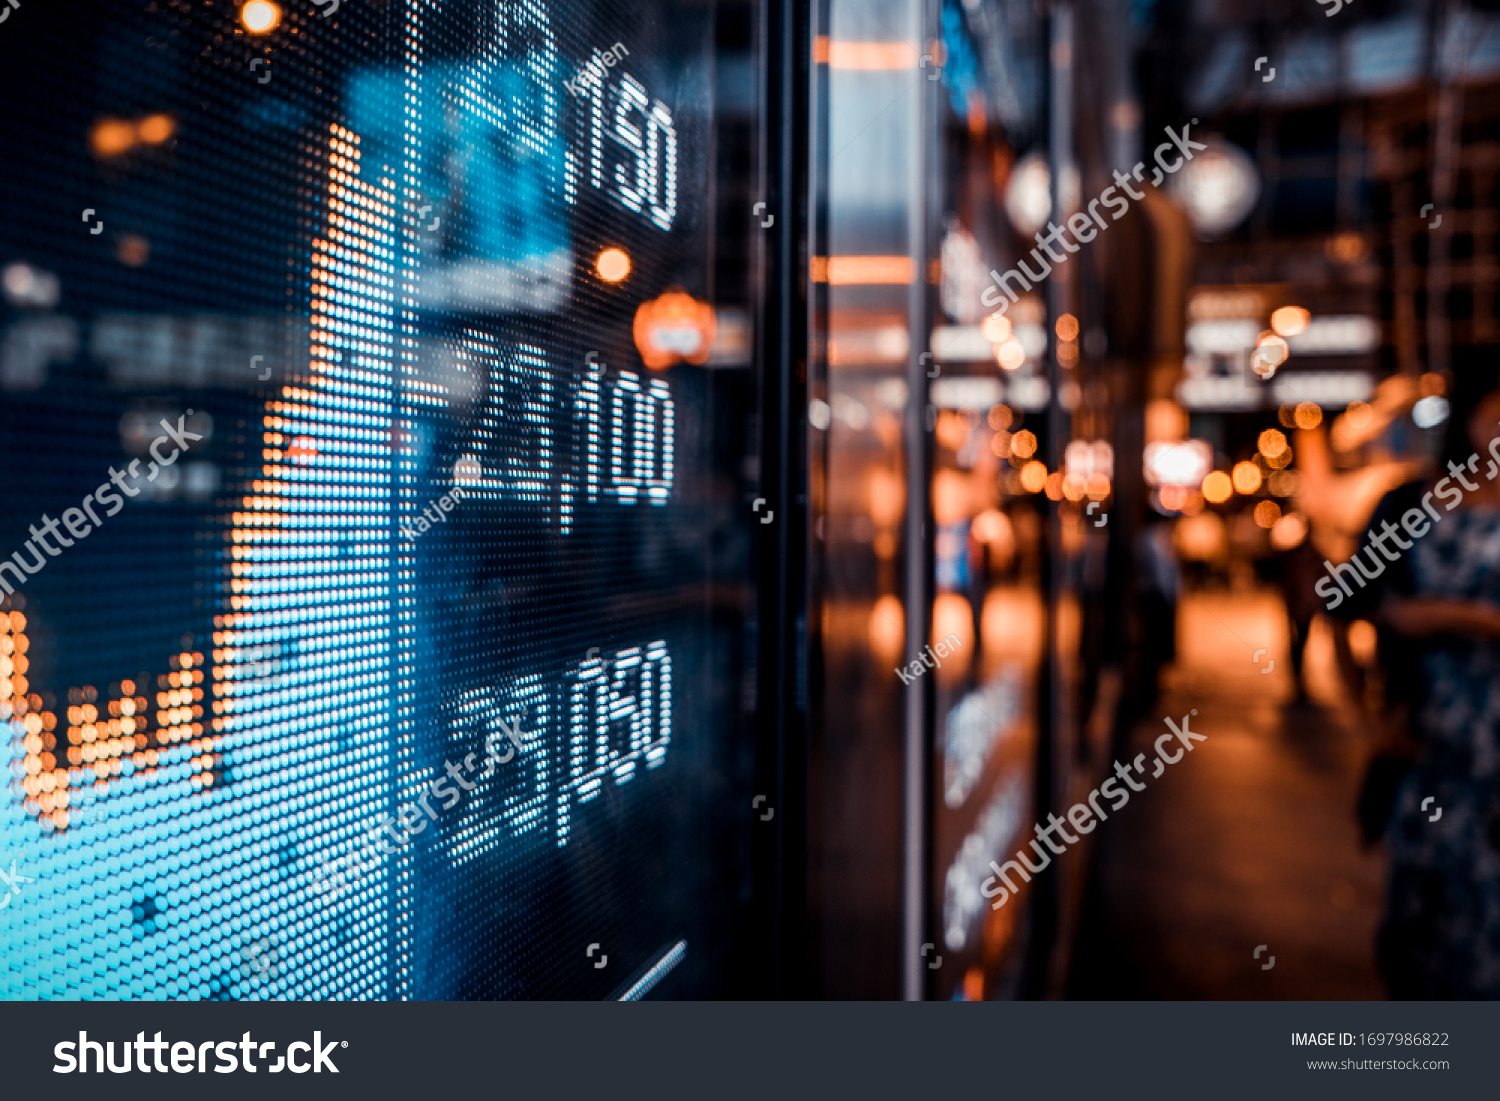 Financial stock exchange market display screen board on the street, selective focus #1697986822